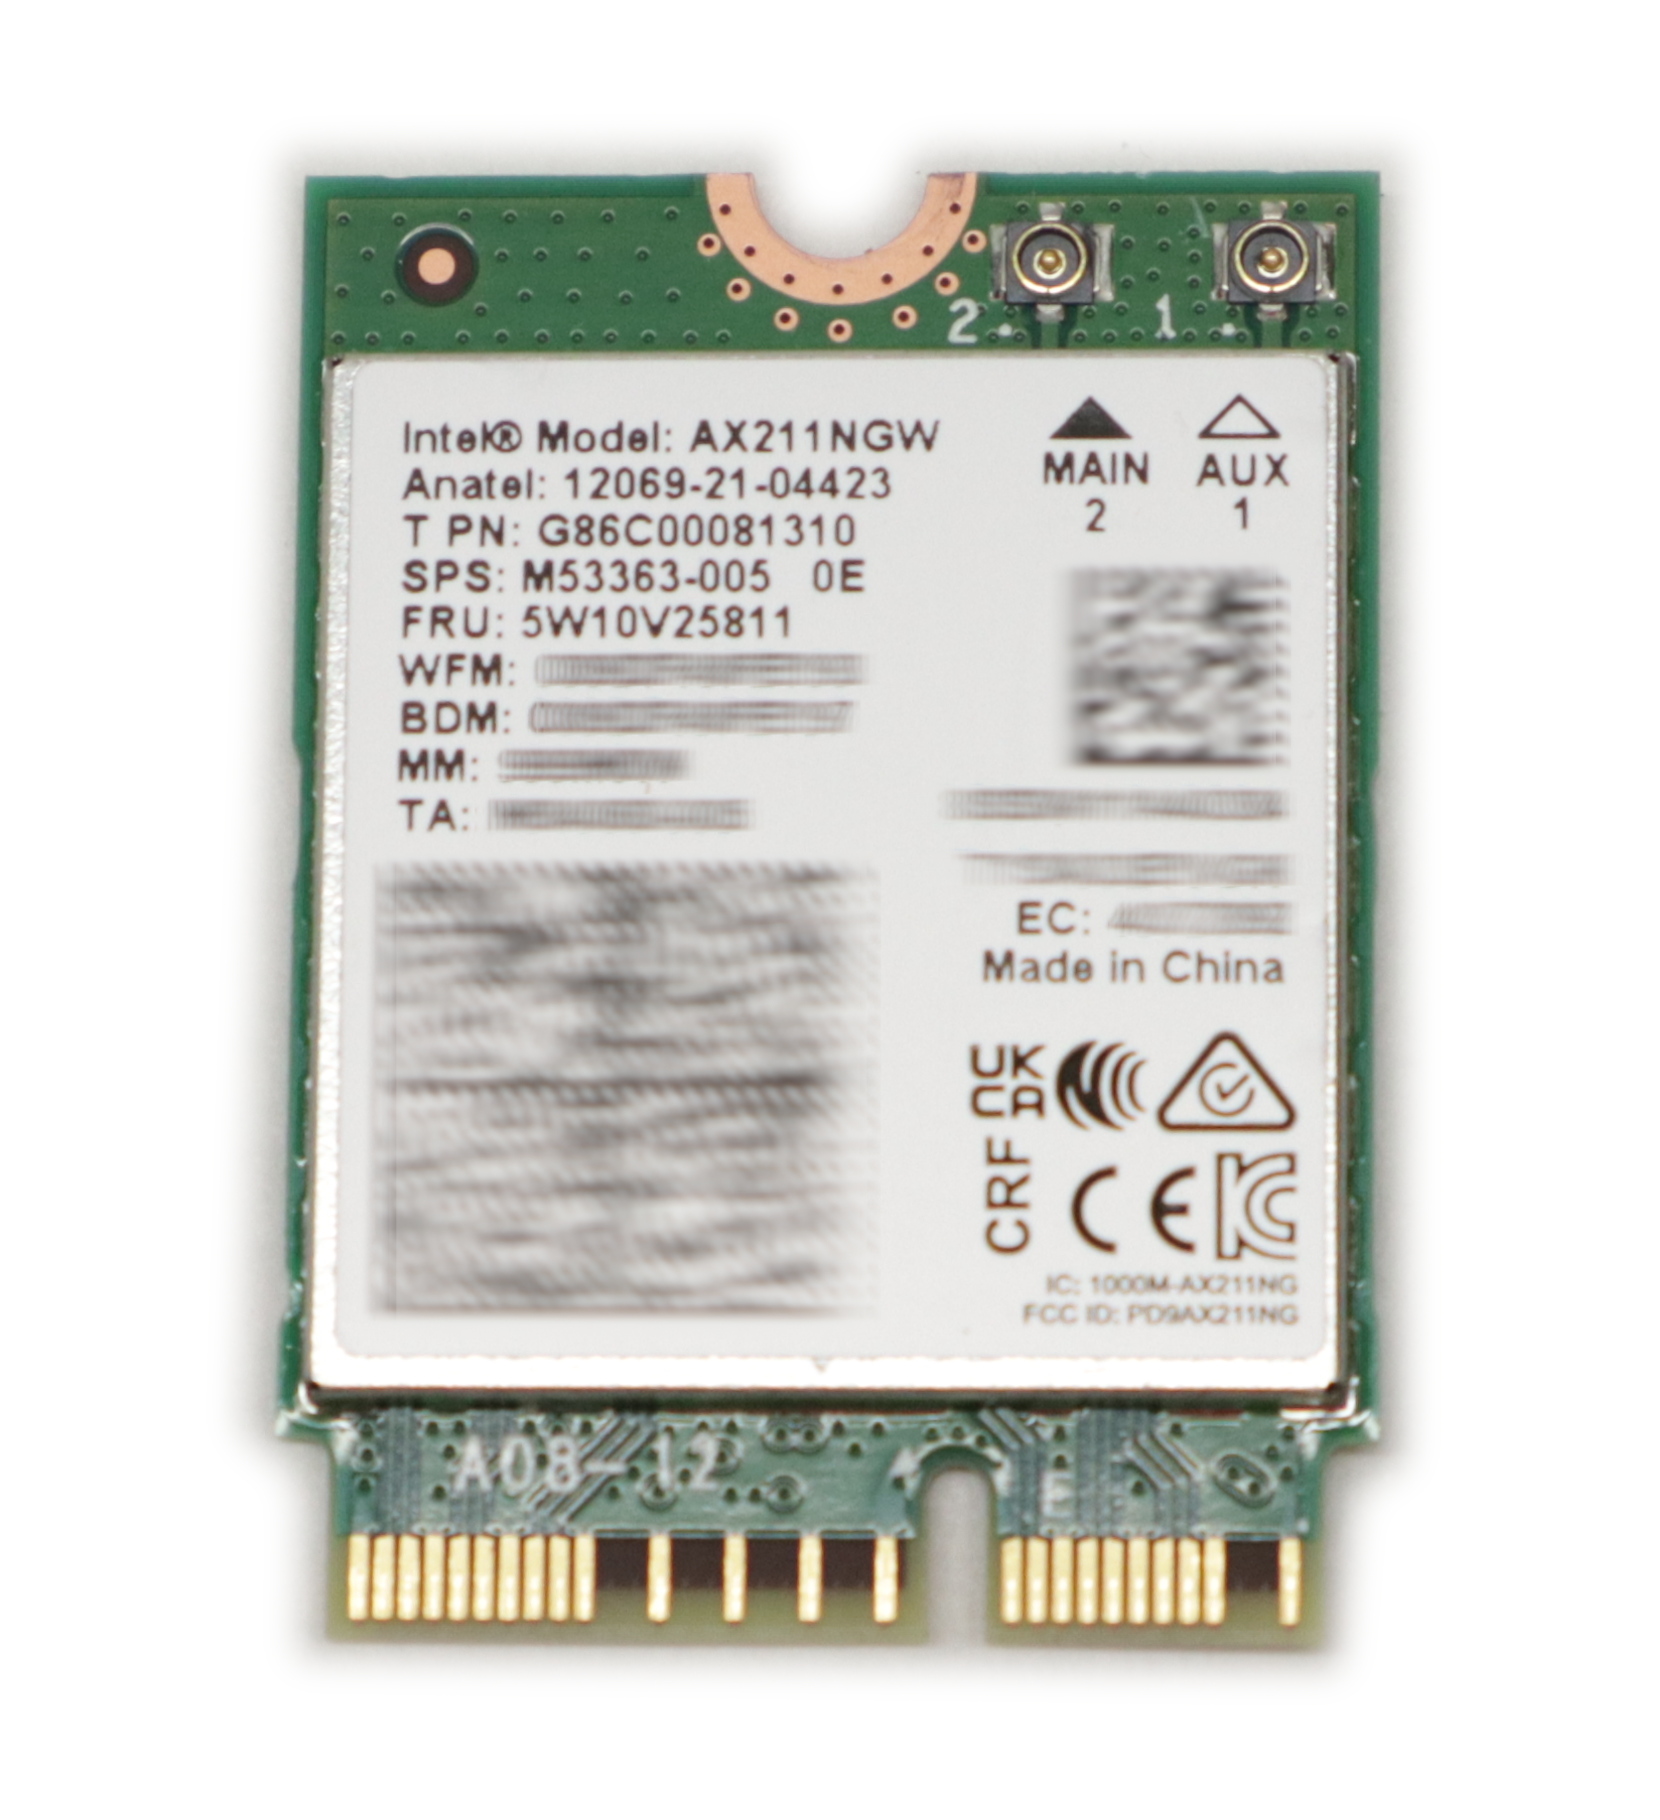 HP Intel AX211NGW Wi-Fi Bluetooth Network M13652-002 M53363-005 5W10v25811